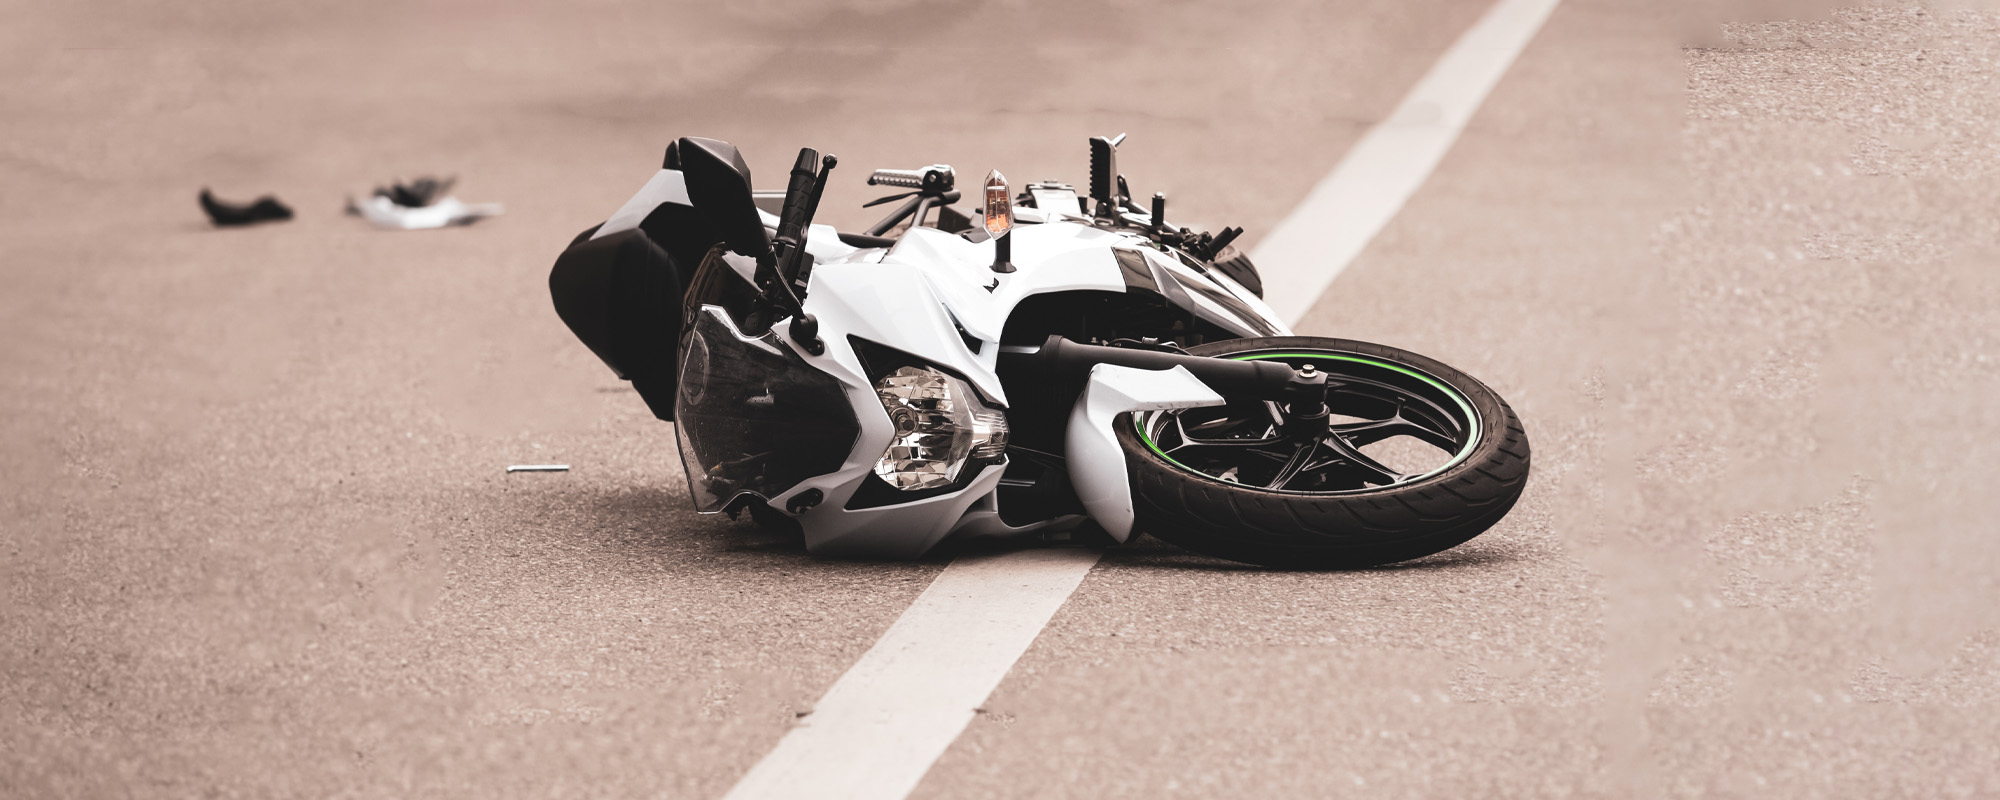 broken motorcycle lies on the road